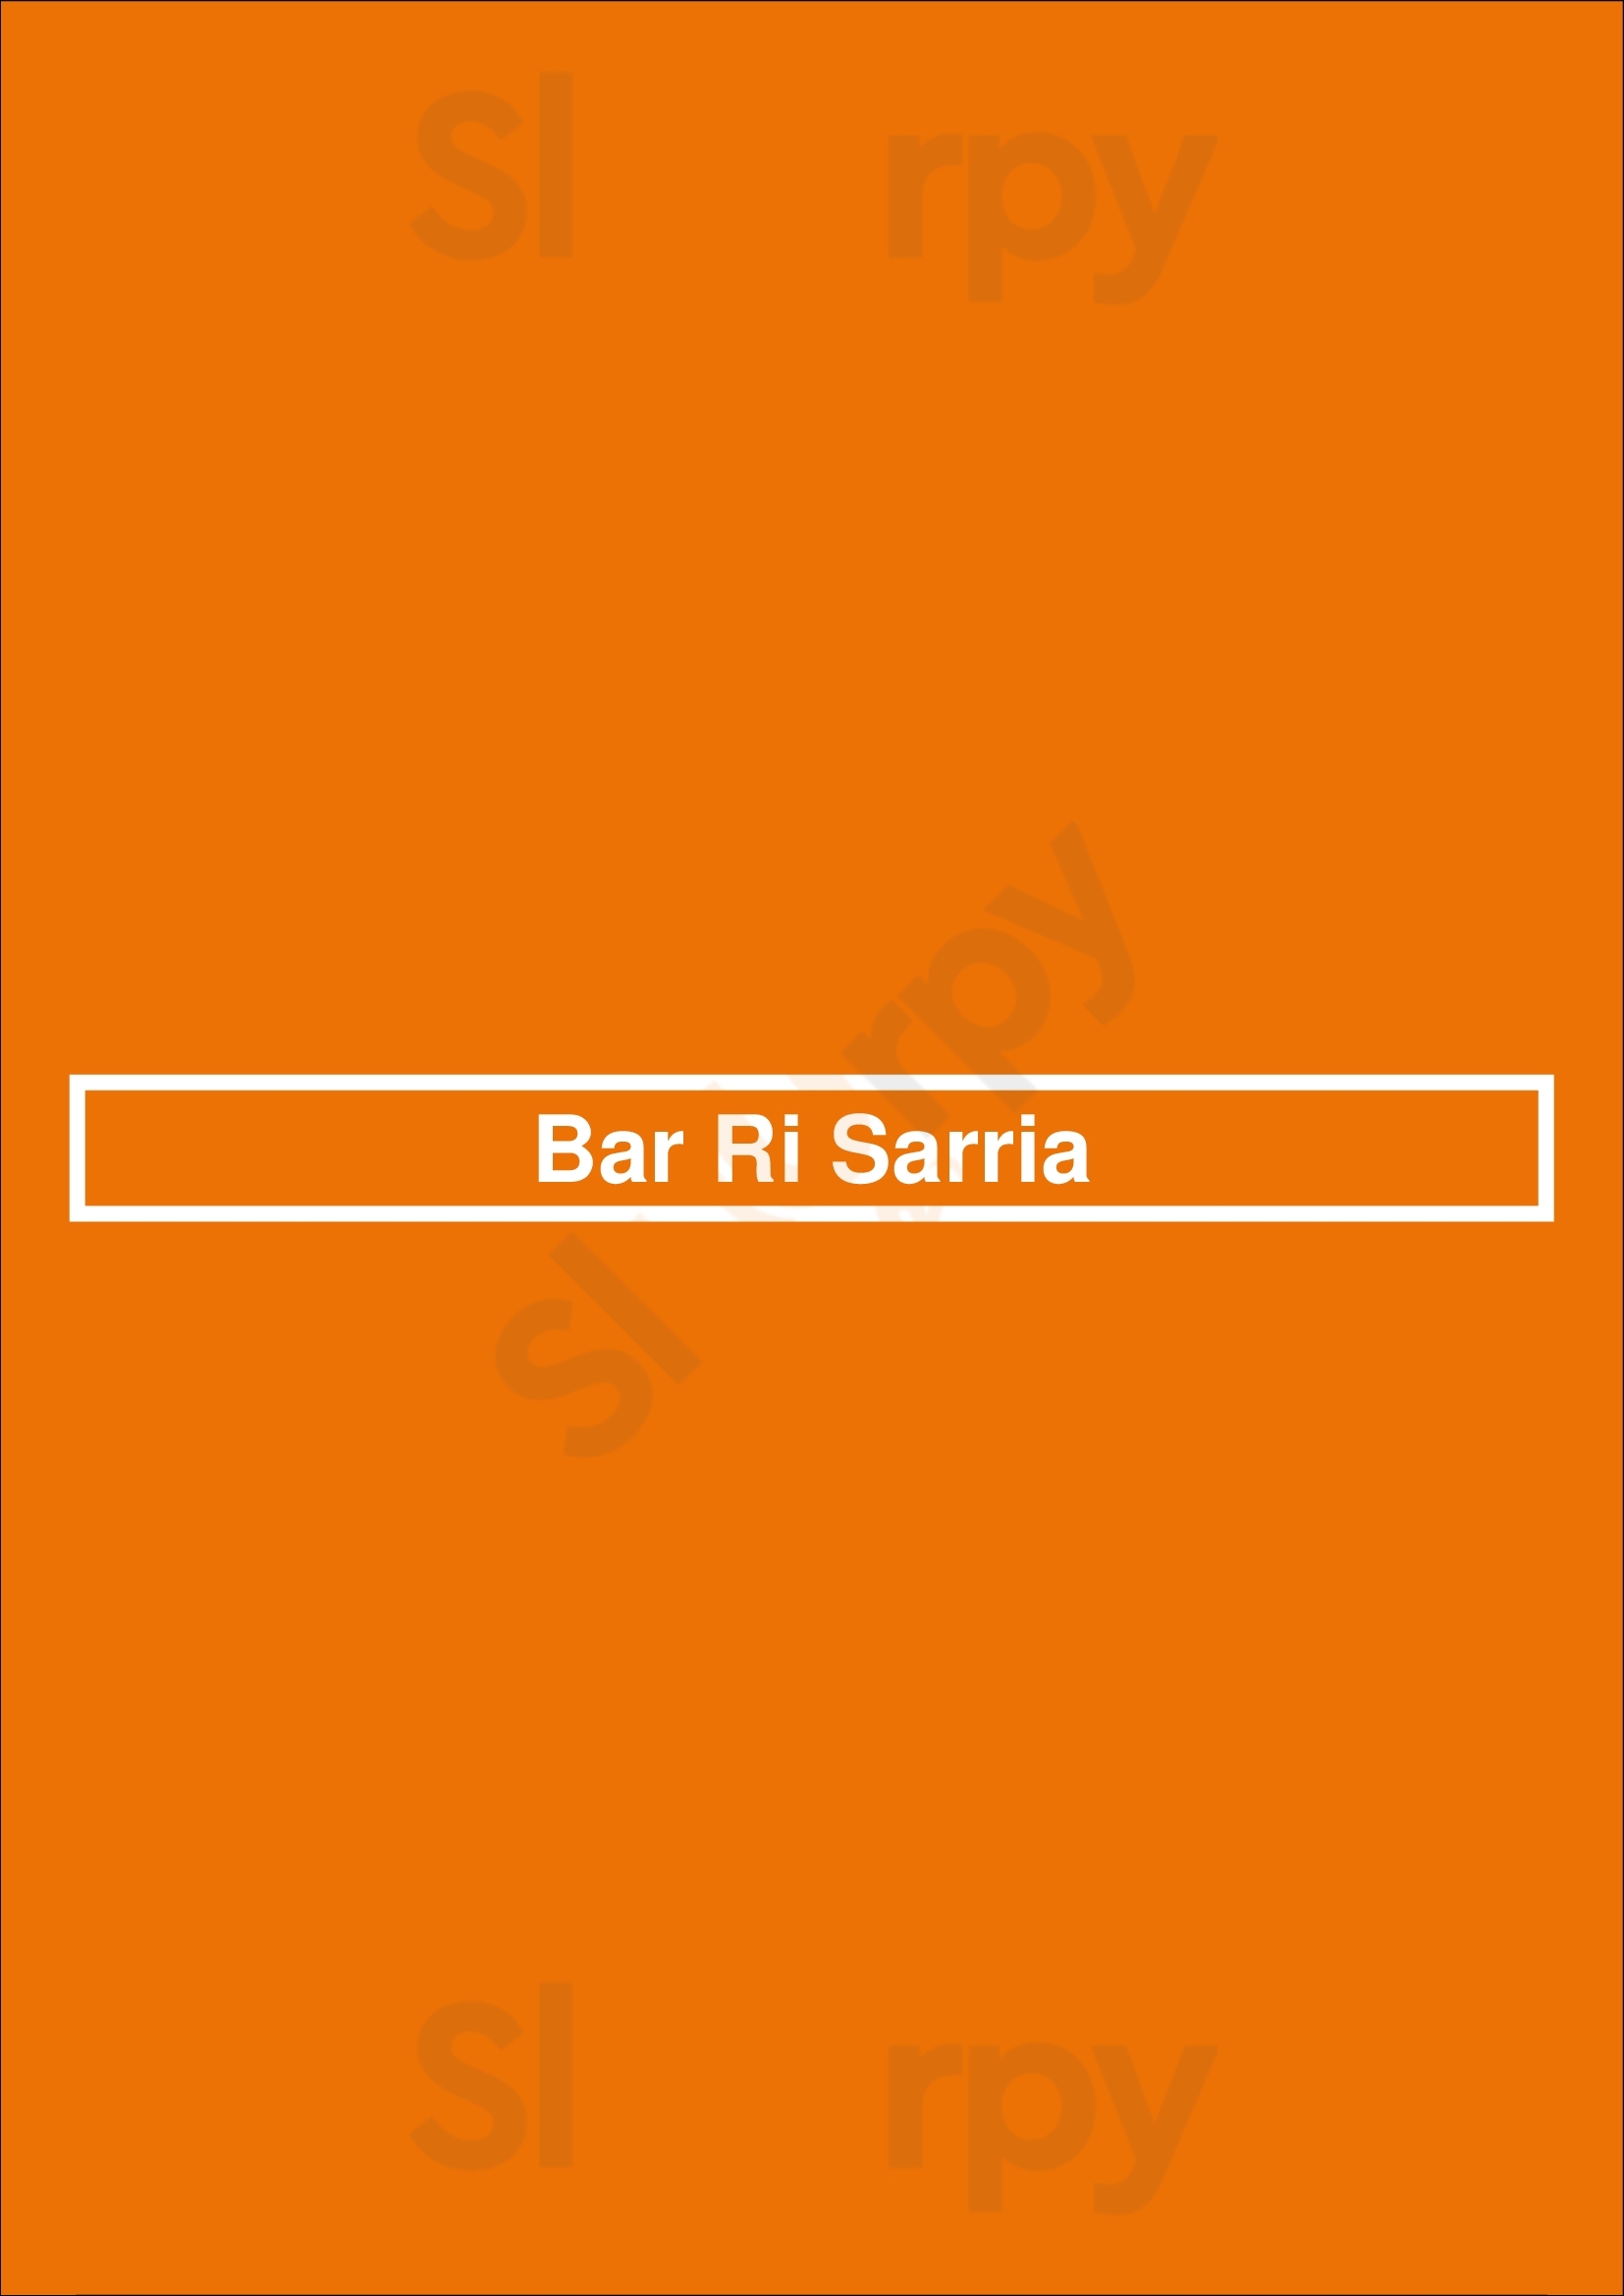 Bar Ri Sarria Barcelona Menu - 1